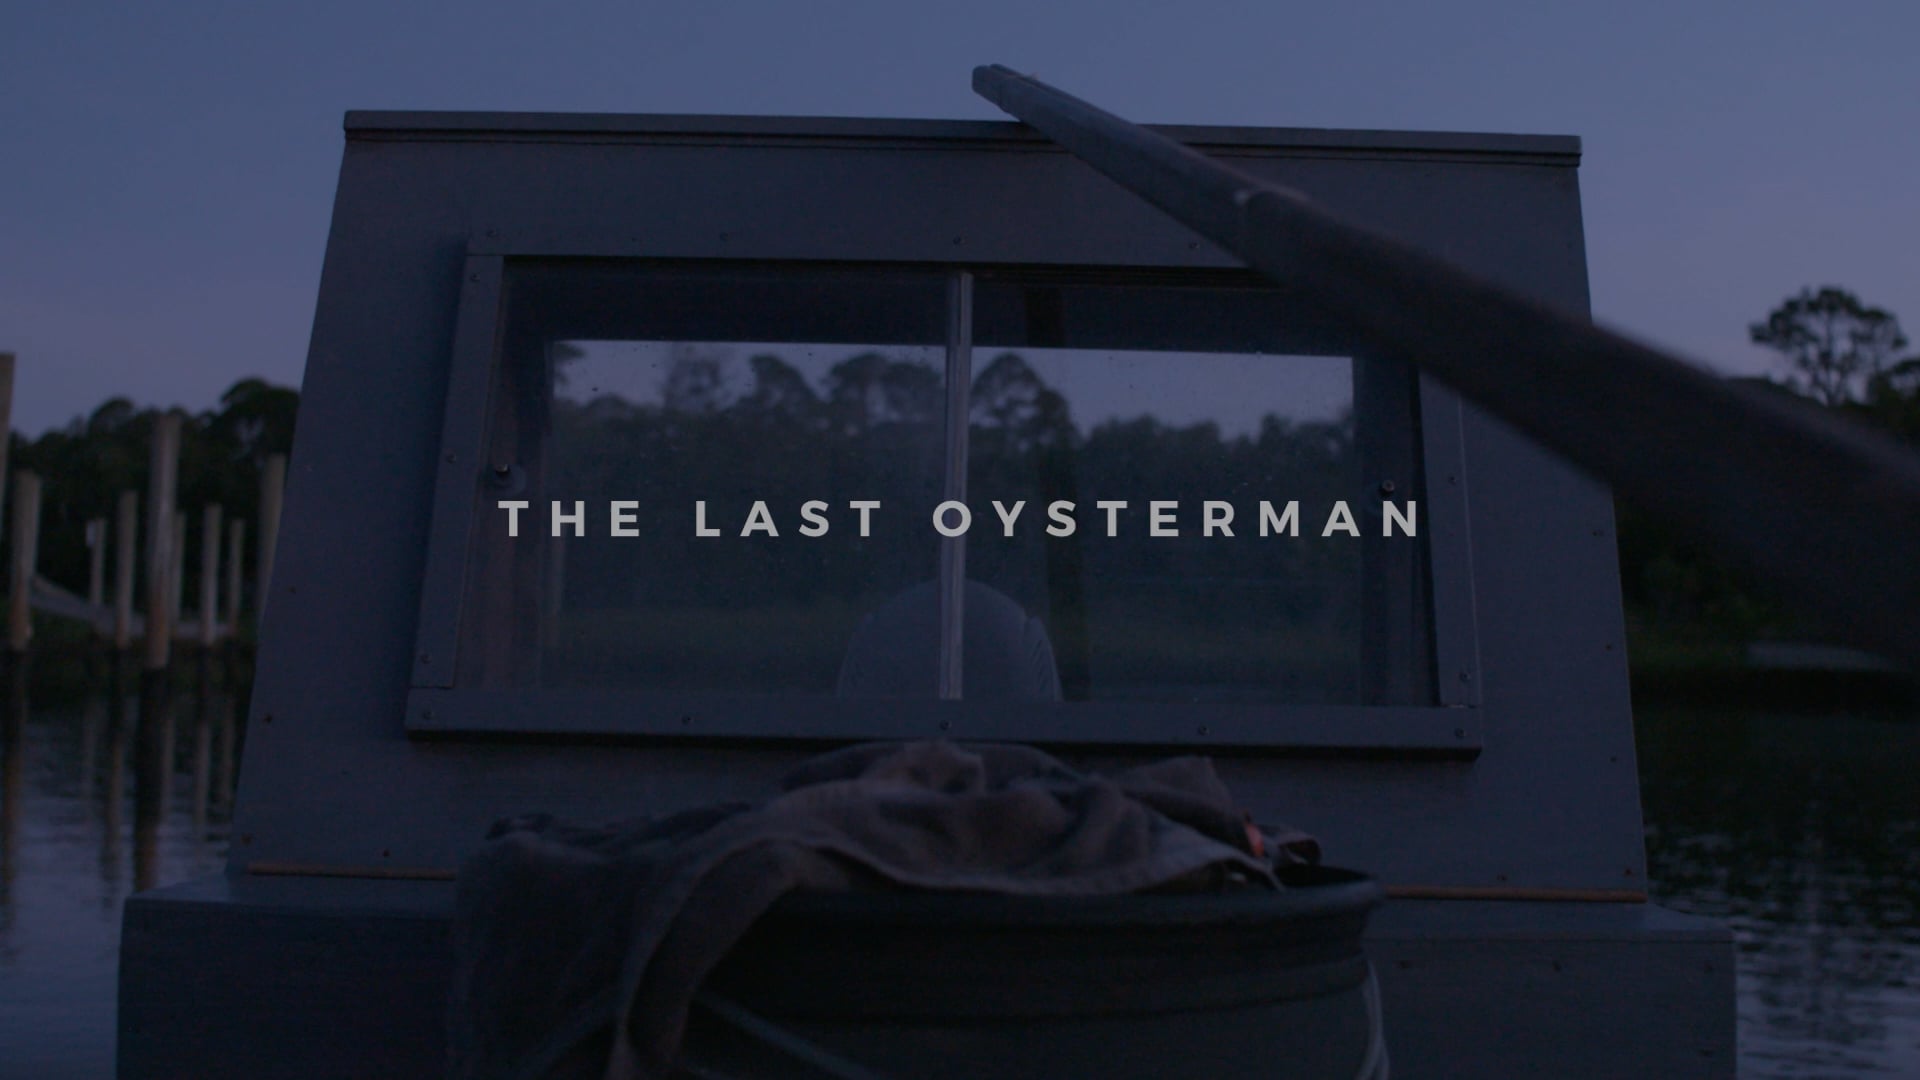 THE LAST OYSTERMAN